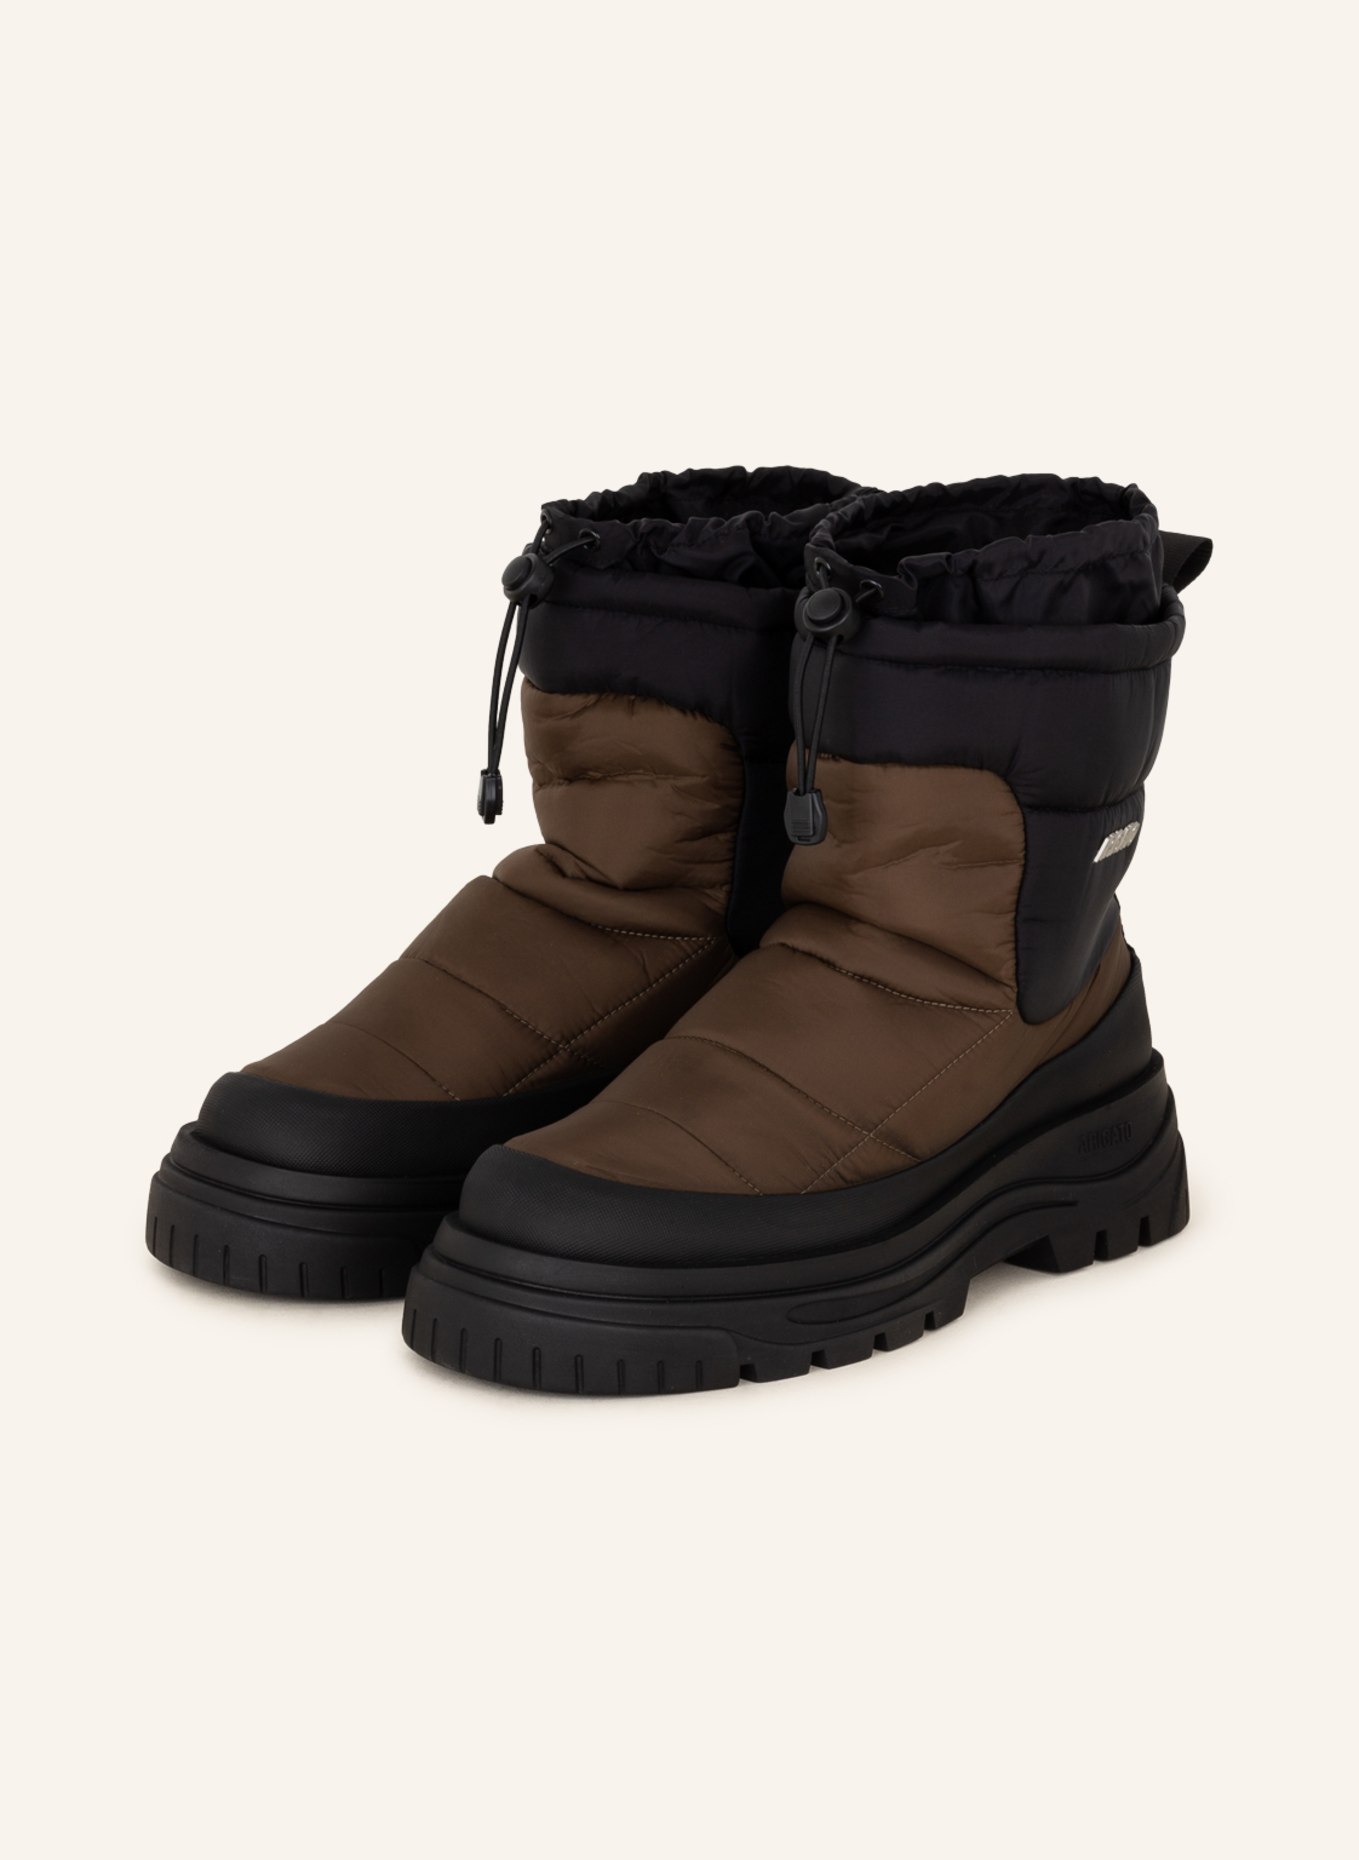 AXEL ARIGATO Boots BLYDE, Farbe: BRAUN/ SCHWARZ (Bild 1)